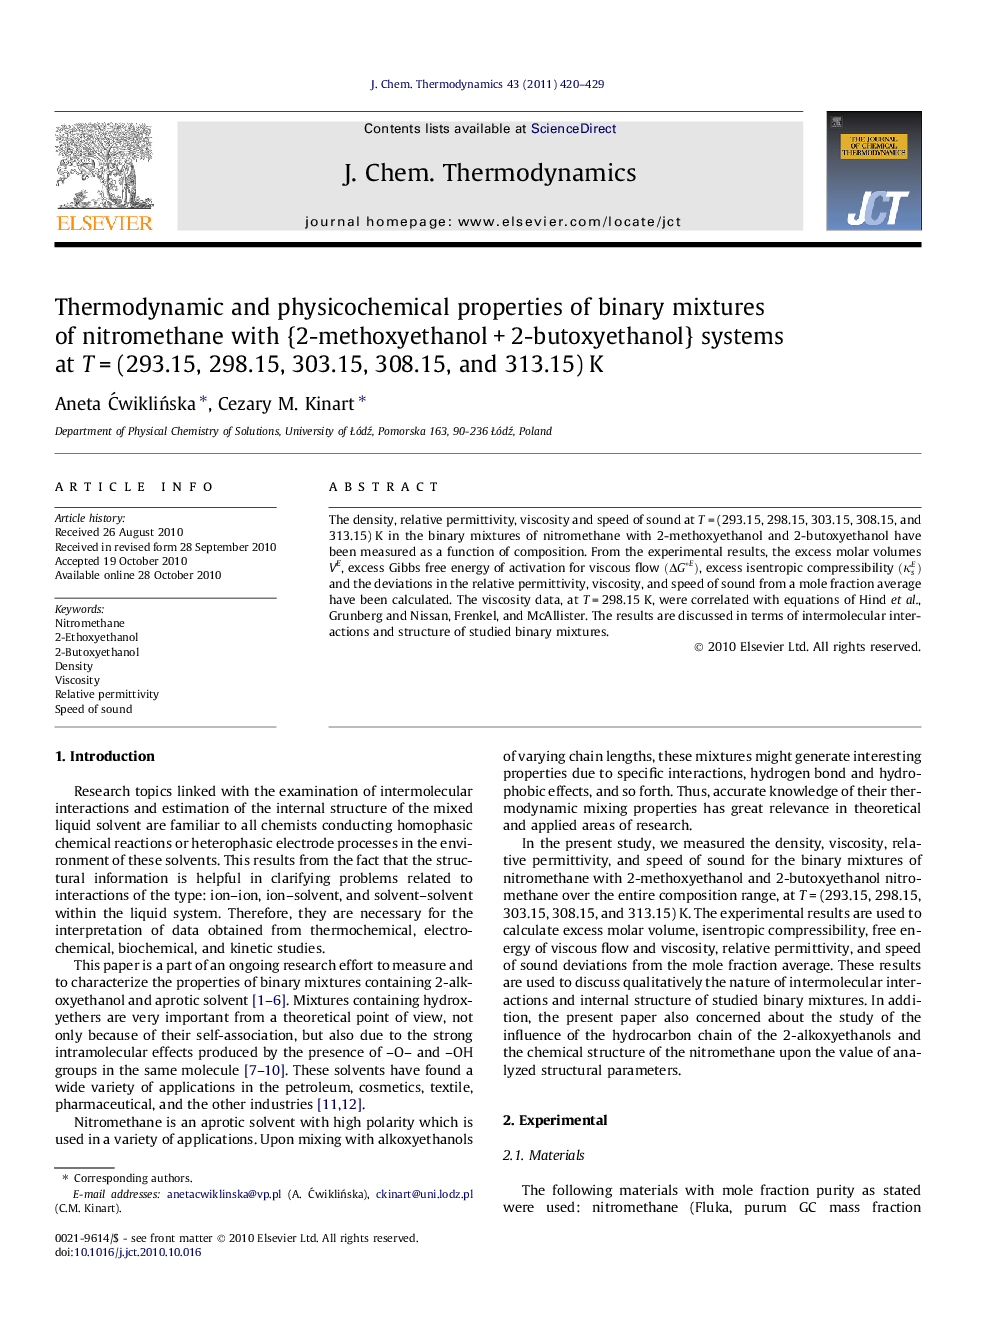 Thermodynamic and physicochemical properties of binary mixtures of nitromethane with {2-methoxyethanol + 2-butoxyethanol} systems at T = (293.15, 298.15, 303.15, 308.15, and 313.15) K